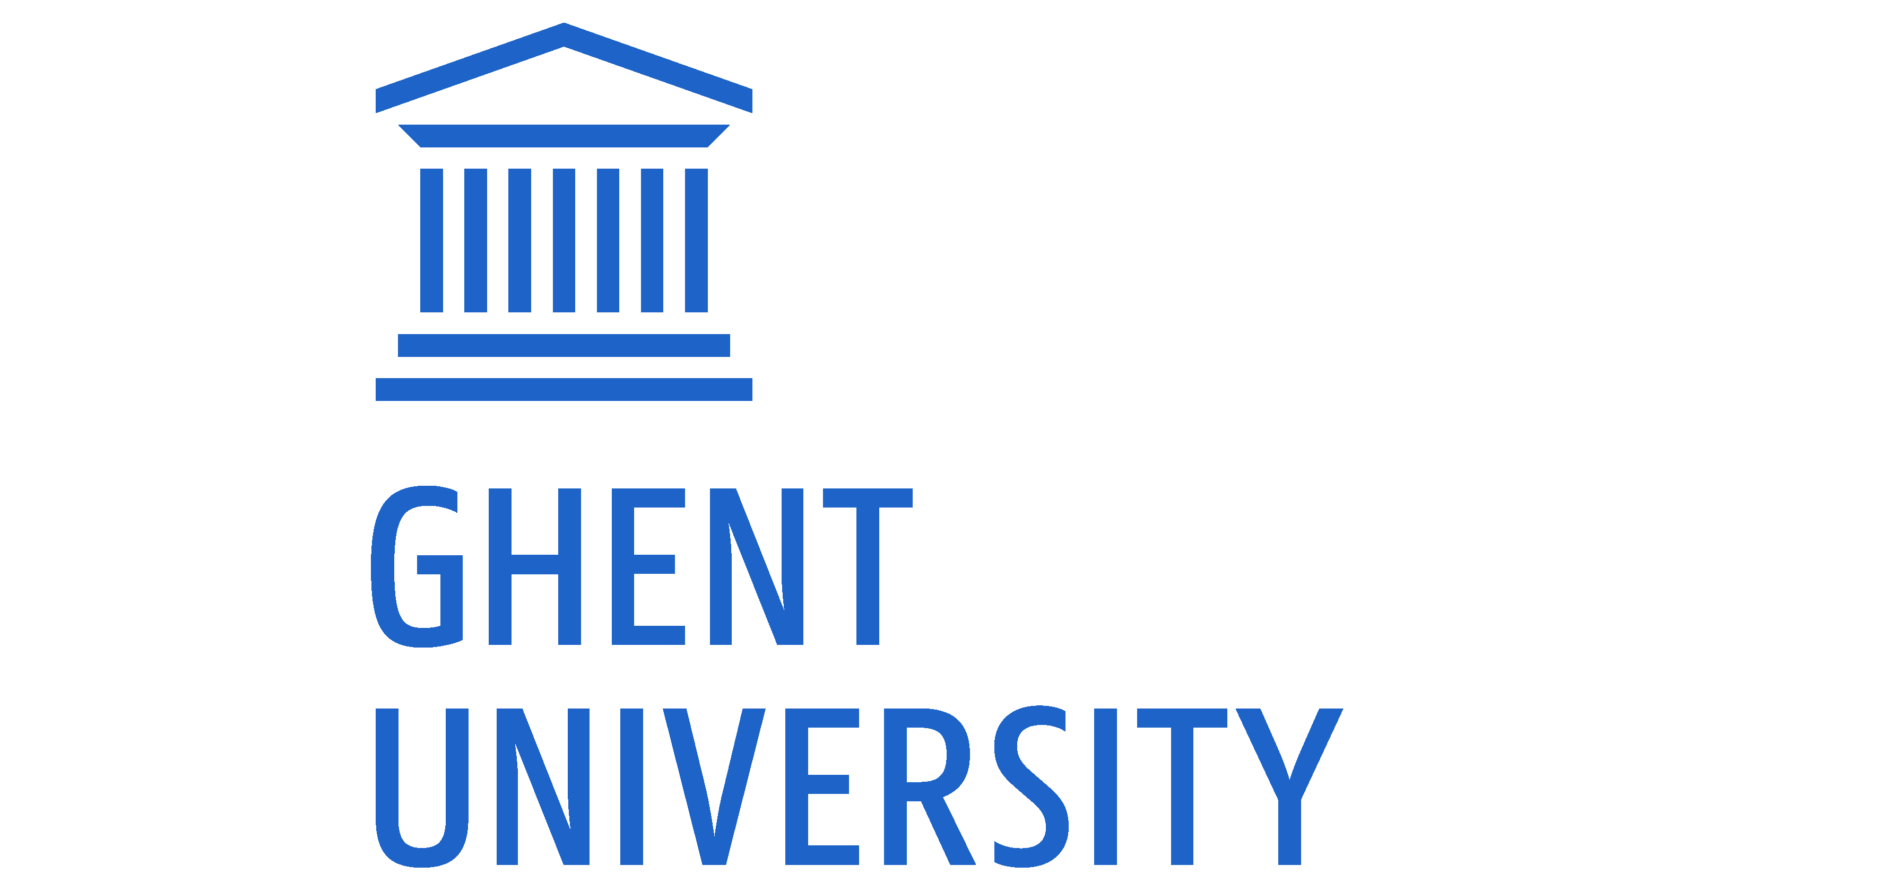 Ghent University logo.